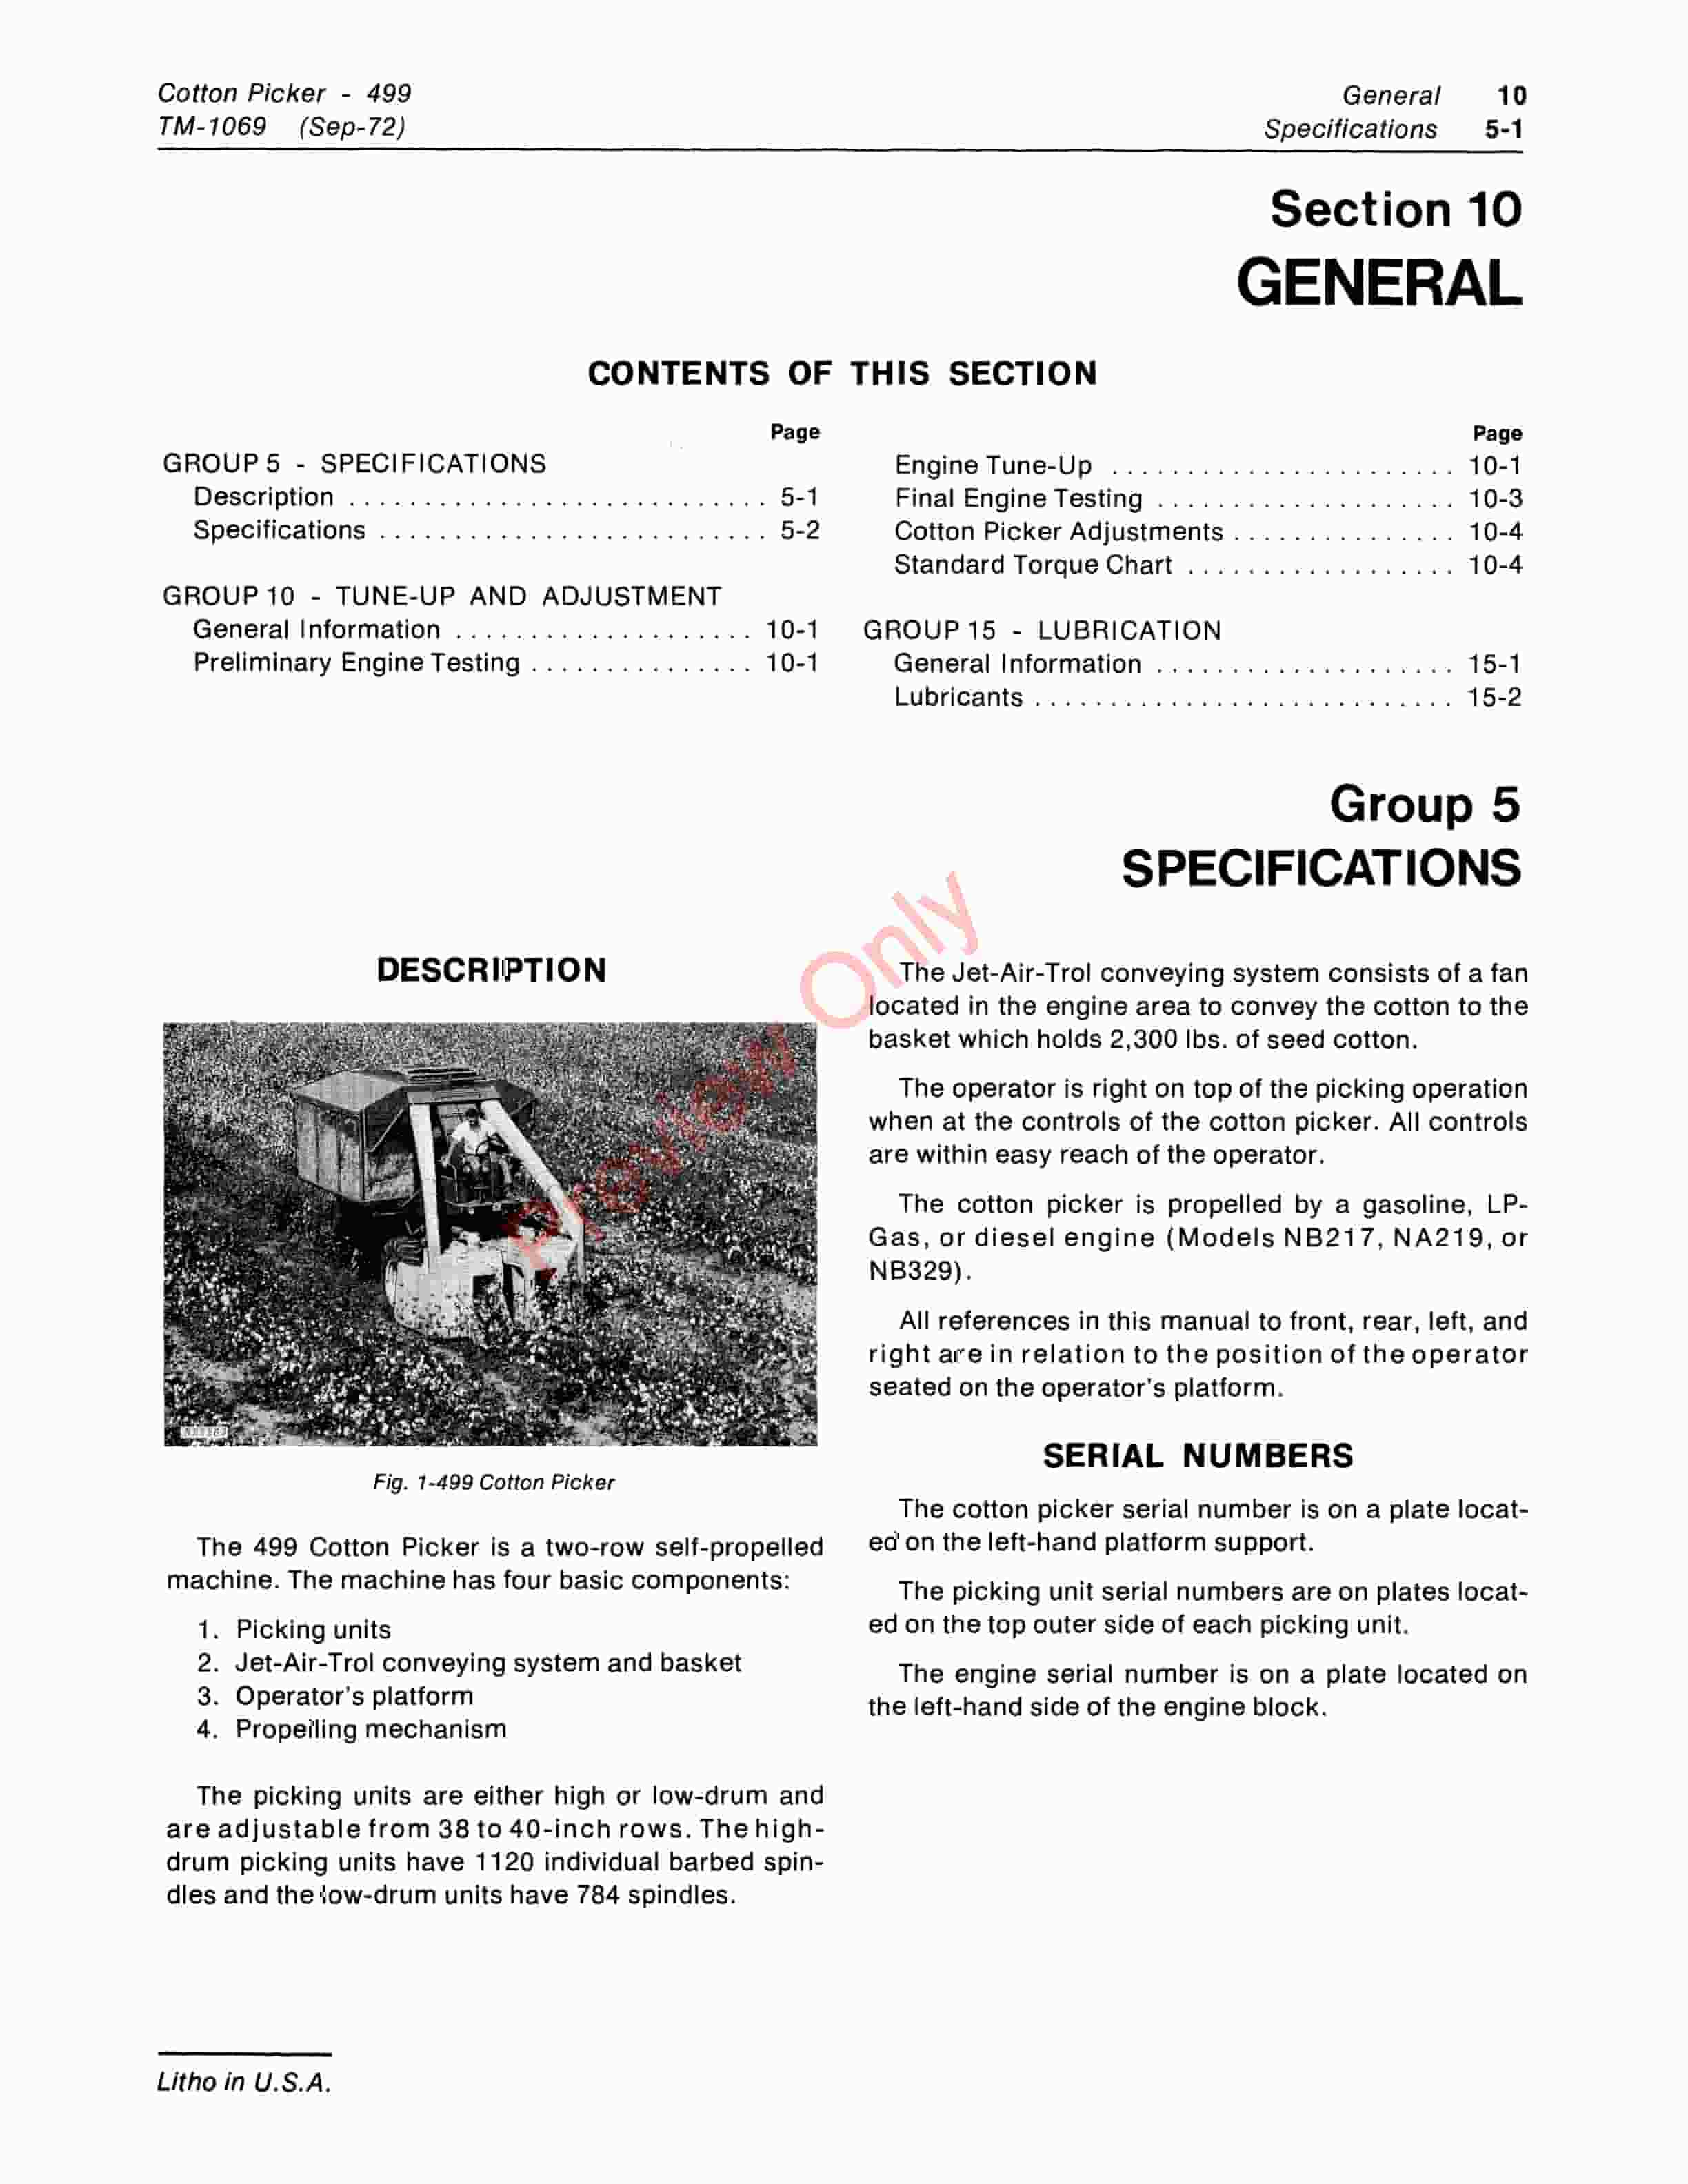 John Deere 499 Cotton Picker Technical Manual TM1069 01DEC73 5